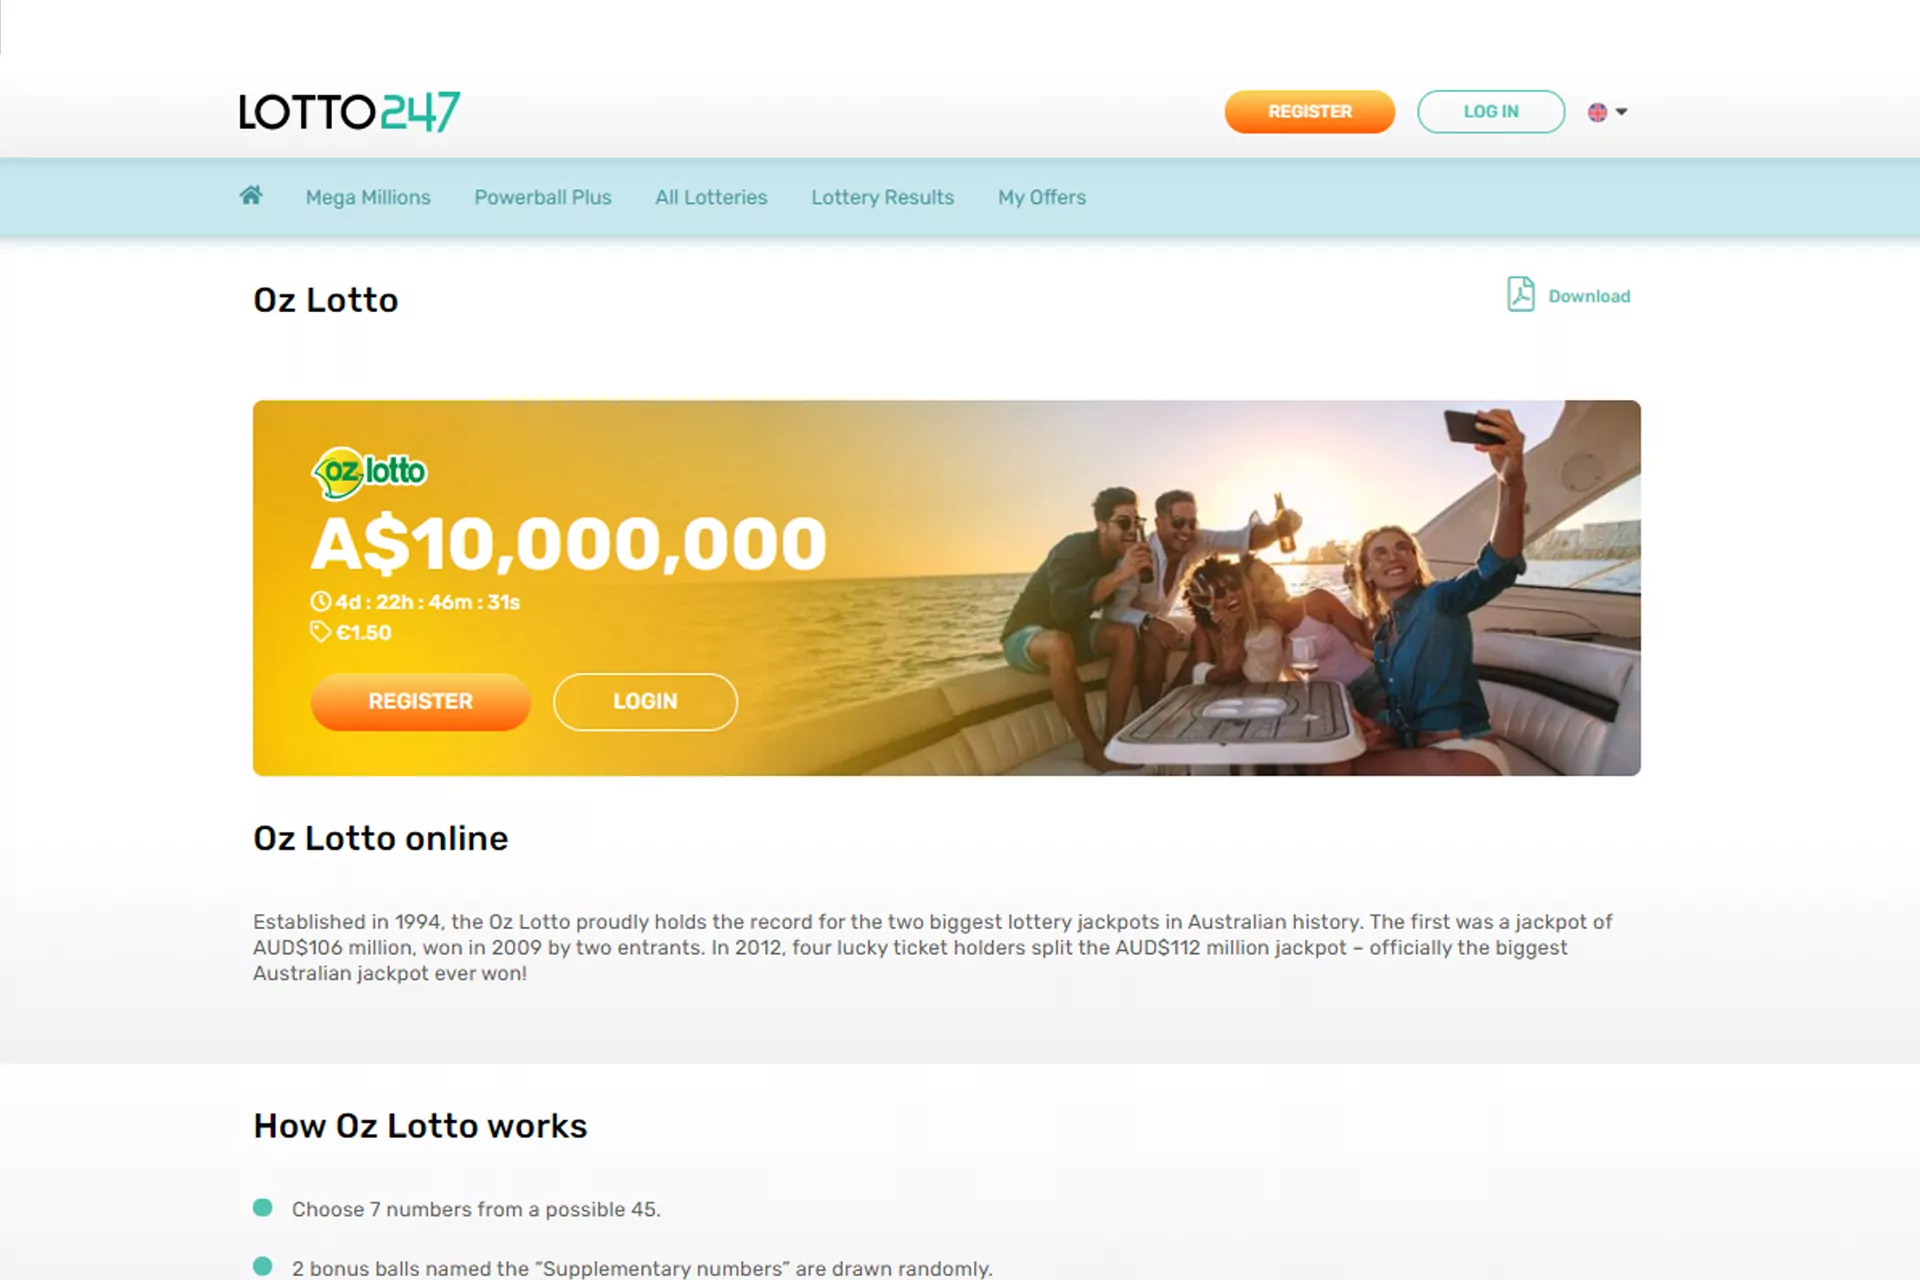 In the Oz Lotto, the biggest jackpot in Australia was drawn.